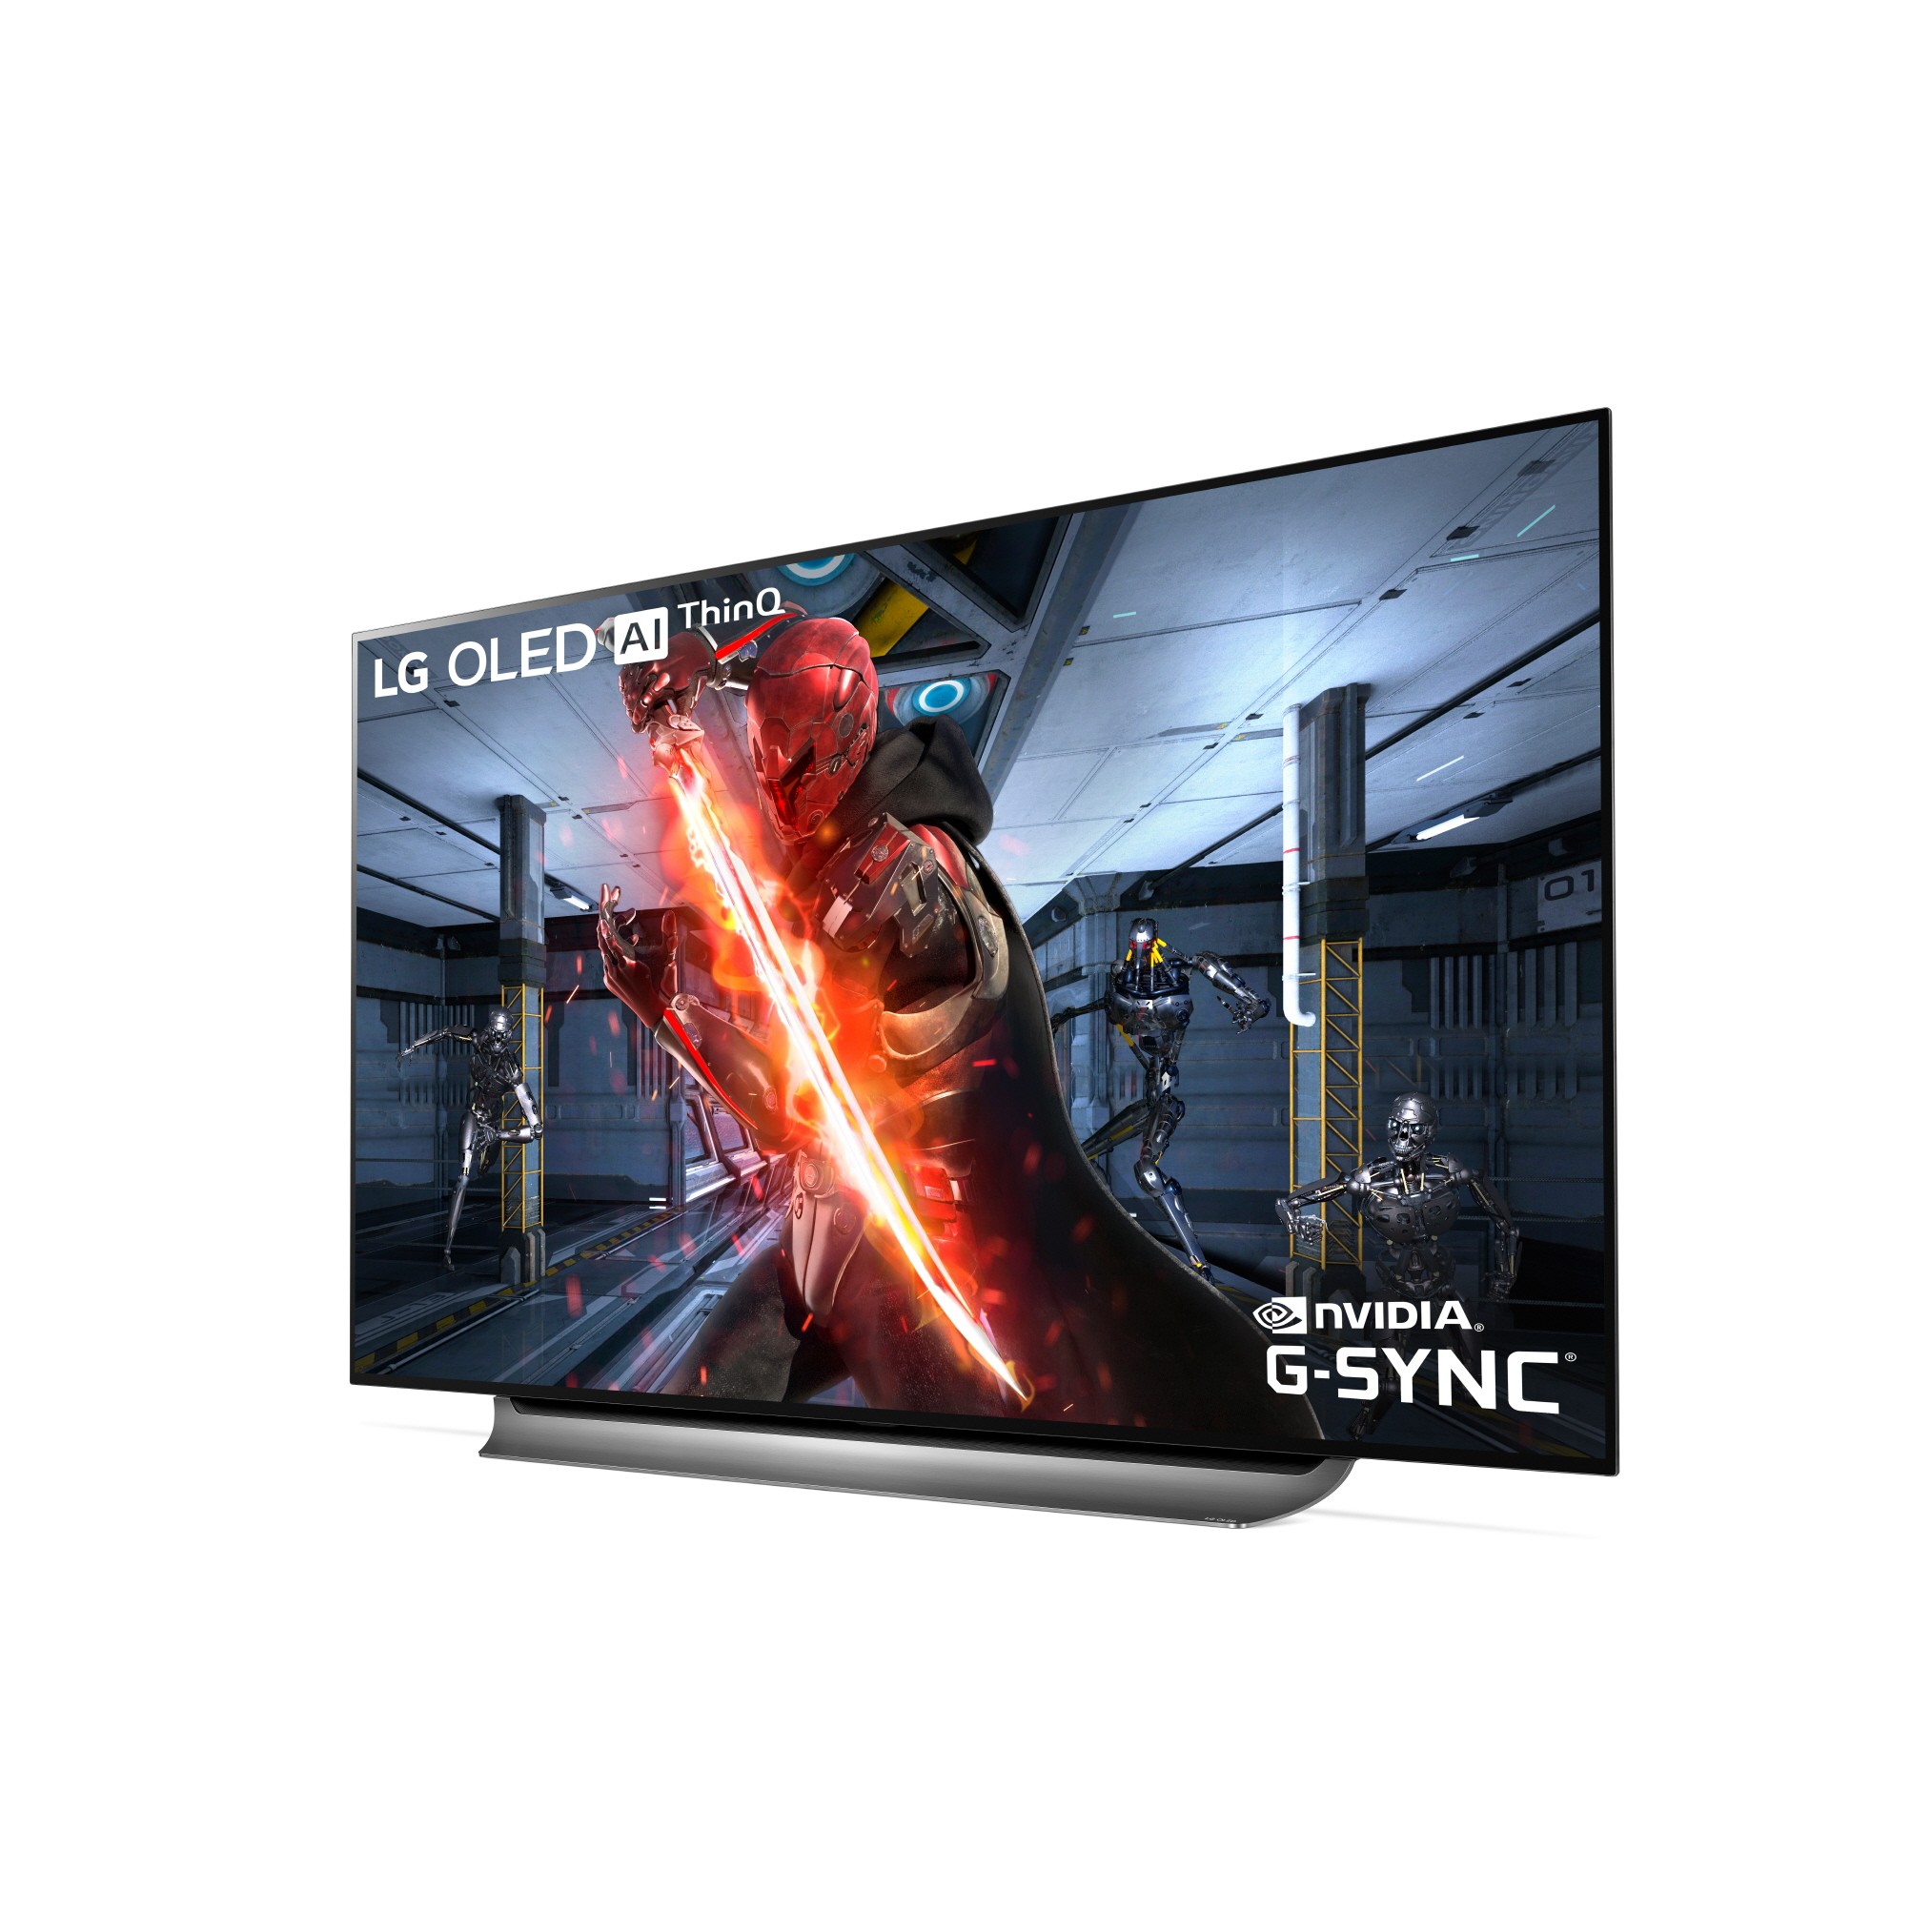 LG OLED TV 2019 serán compatibles con Nvidia G-Sync